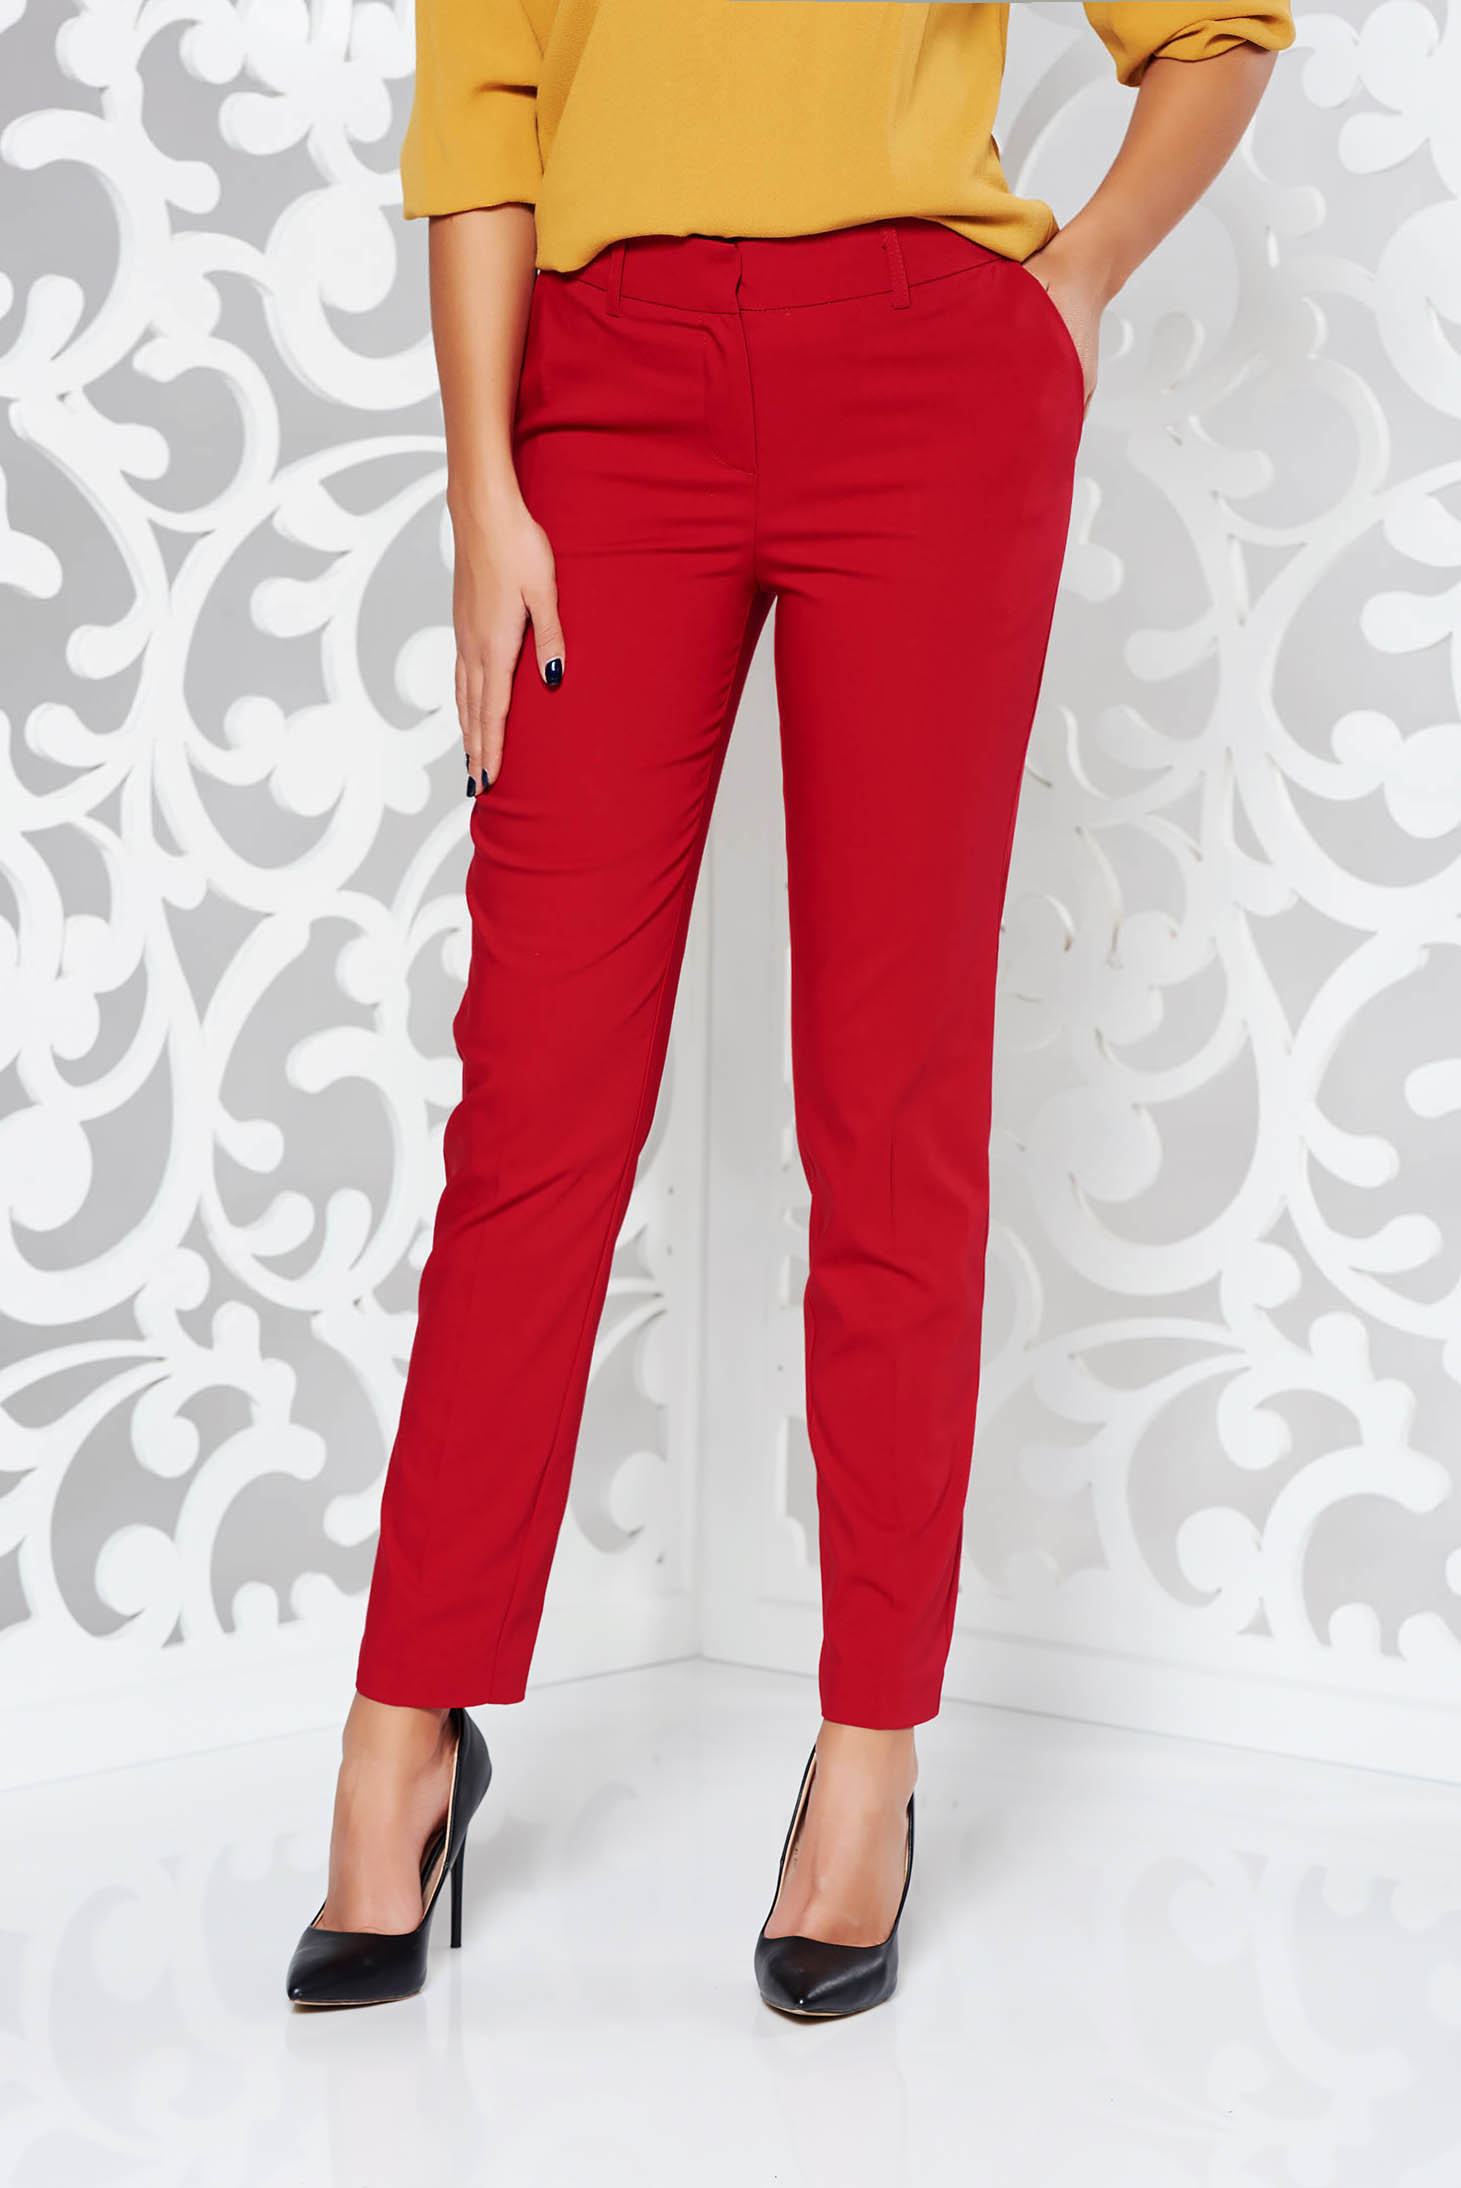 Joint gloss Blink Pantaloni rosii office conici cu talie medie din bumbac cu buzunare